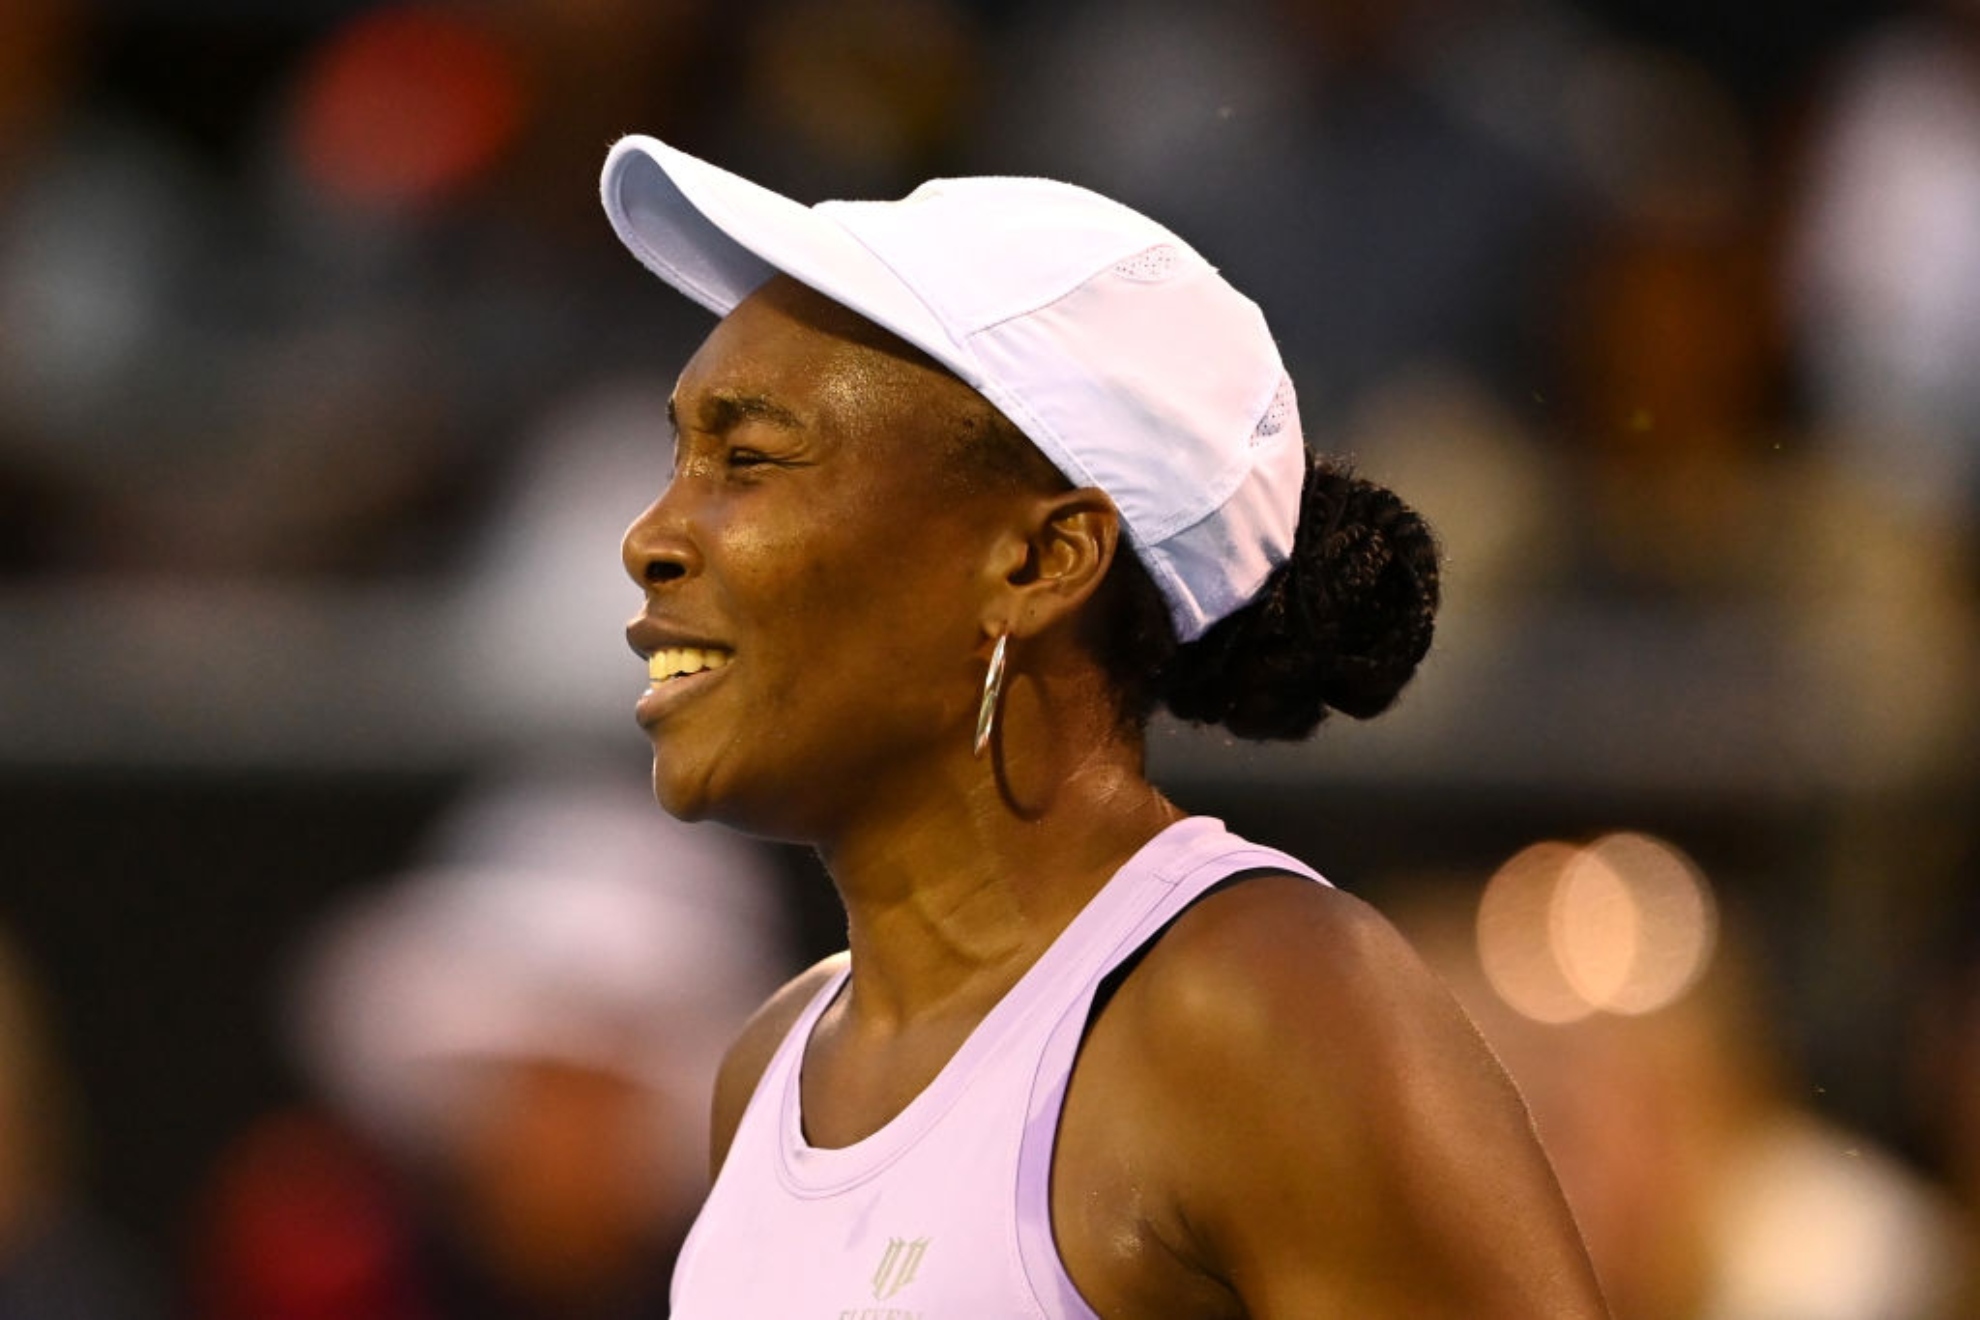 Venus Williams wins a tennis match after 552 days of waiting